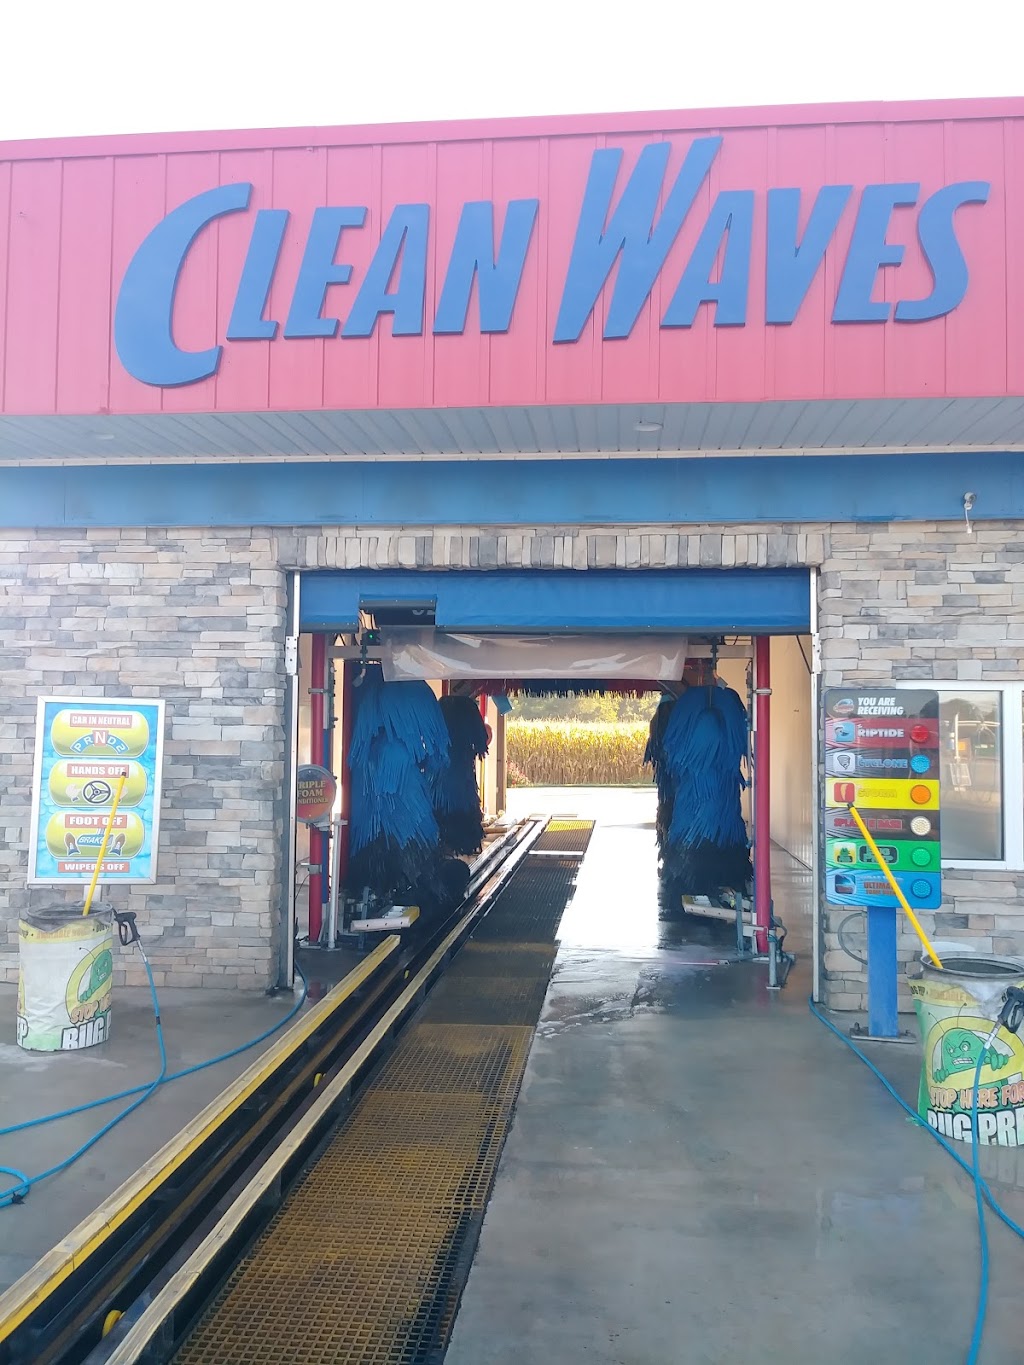 Clean Waves Express Wash | 2070 Bypass Rd, Brandenburg, KY 40108, USA | Phone: (270) 422-2277